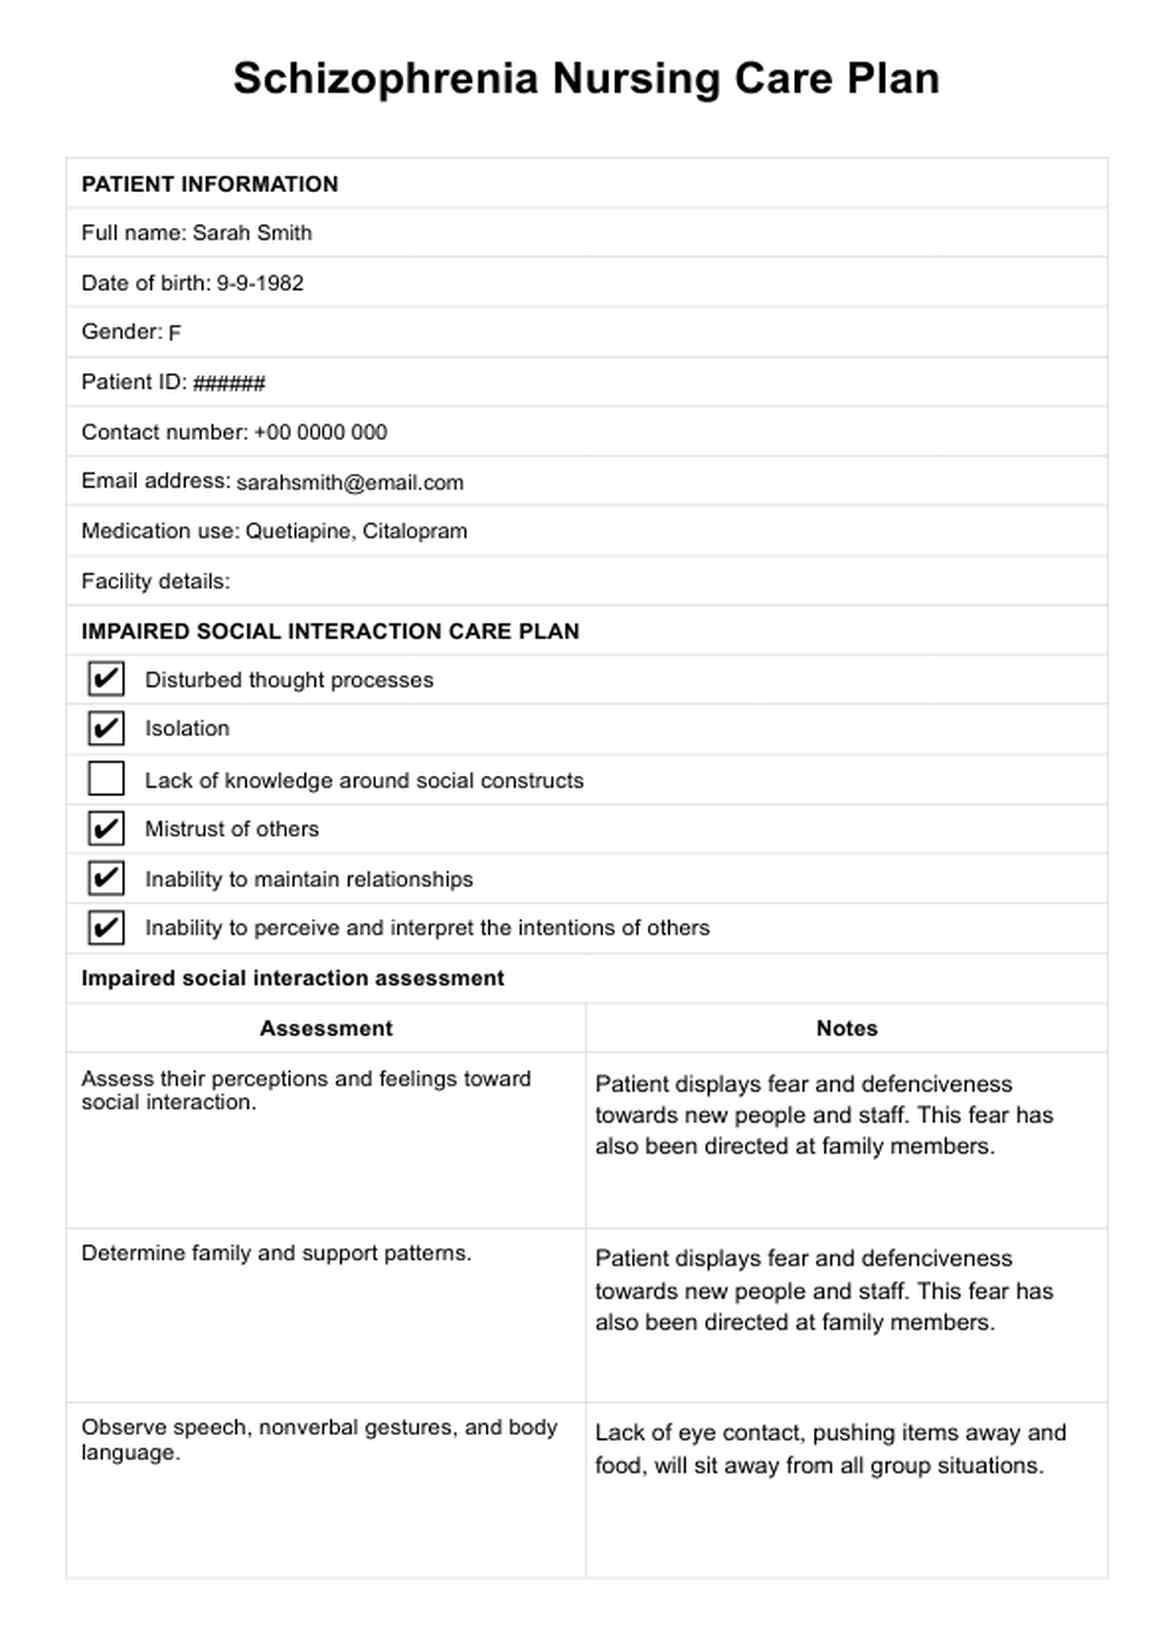 Schizophrenia Nursing Care Plan PDF Example